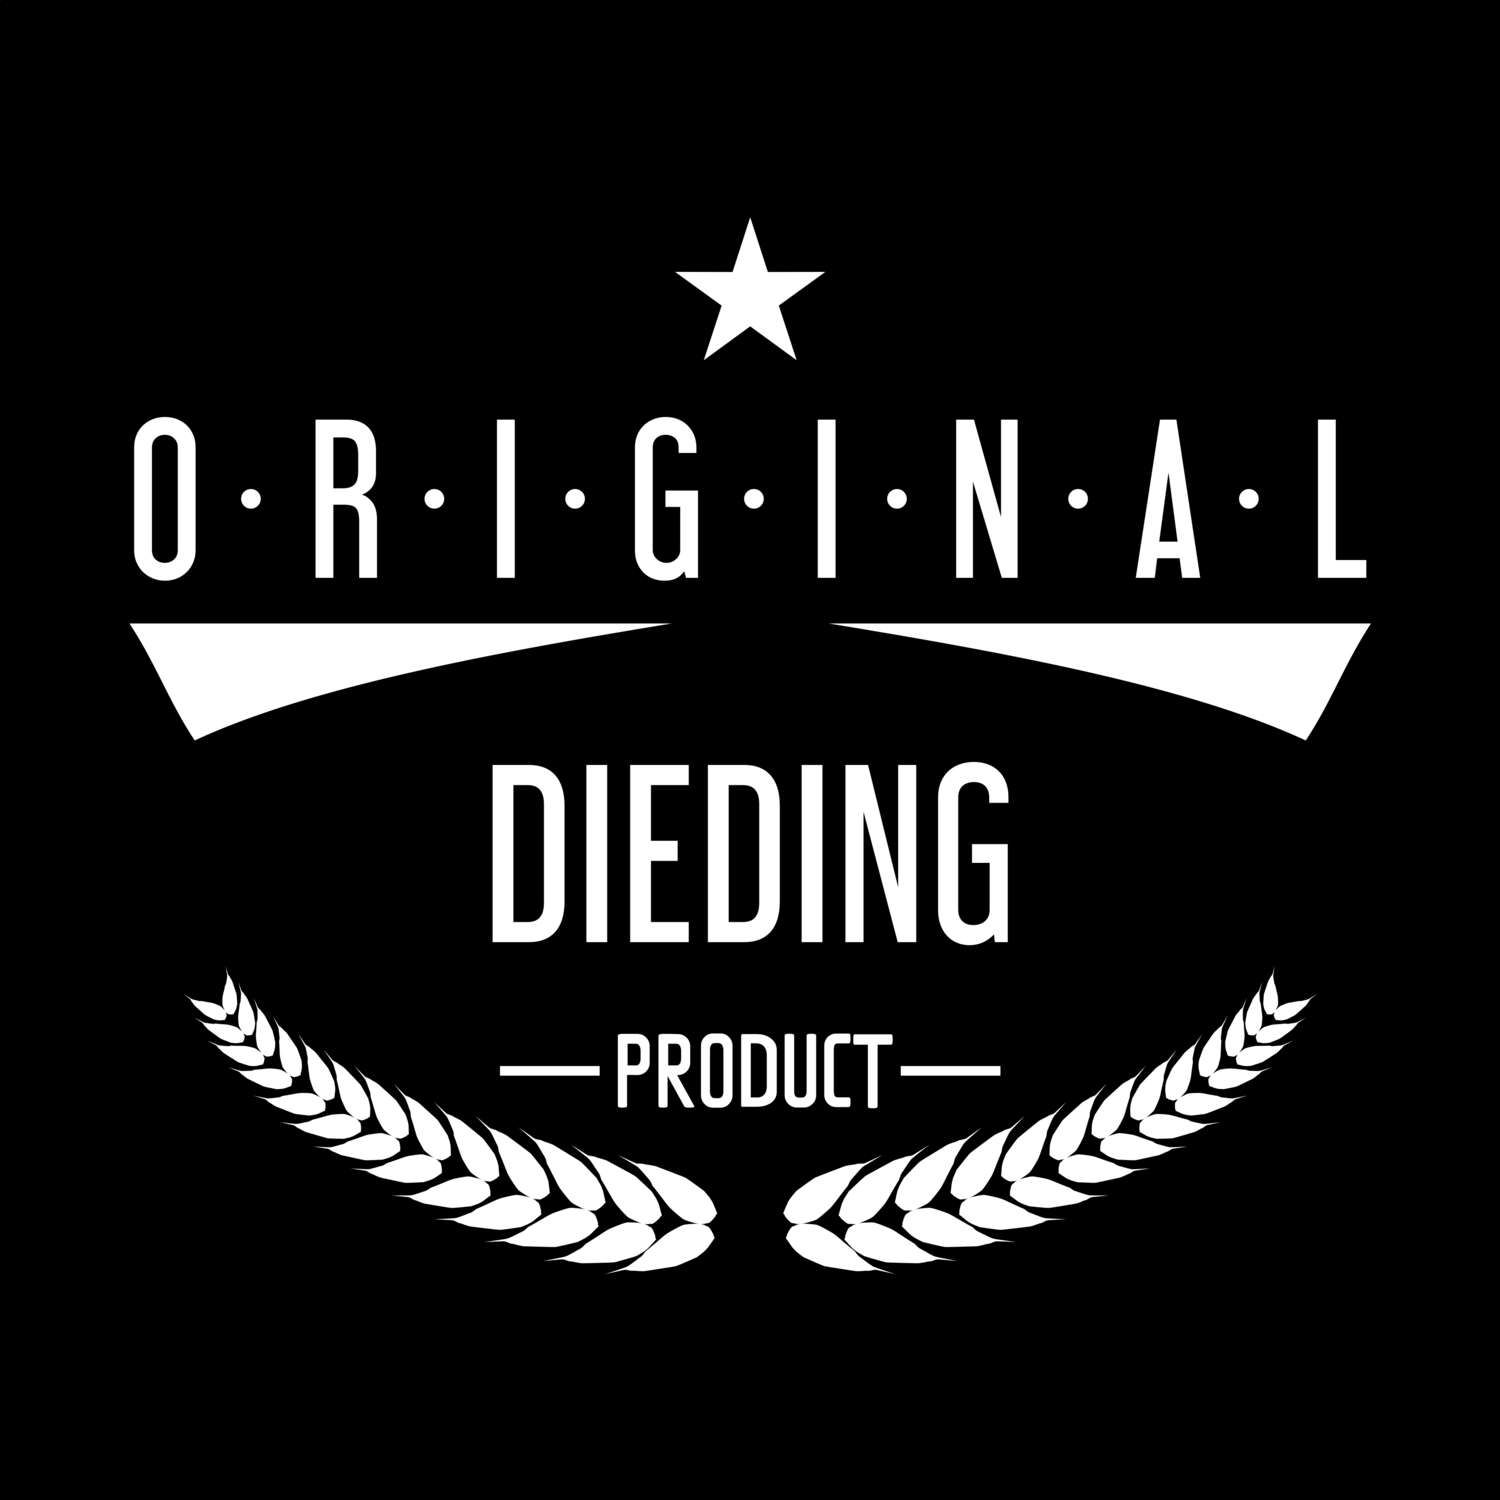 Dieding T-Shirt »Original Product«